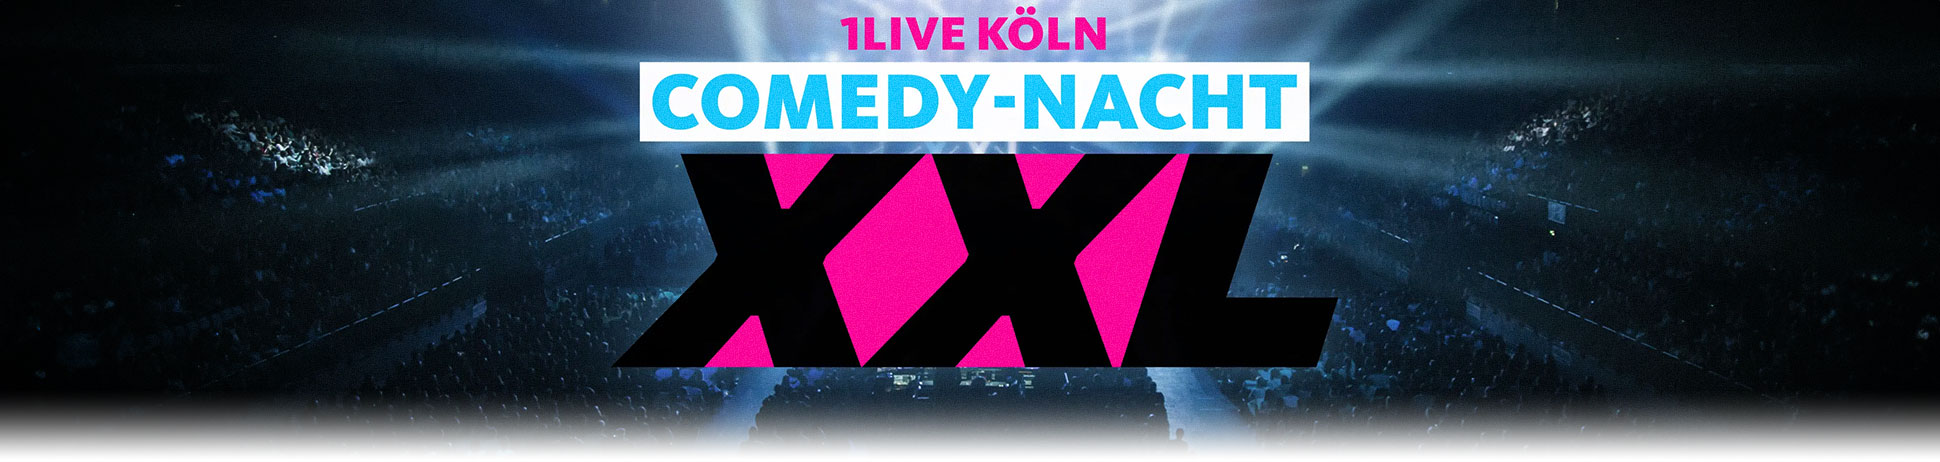 1LIVE Köln Comedy-Nacht XXL